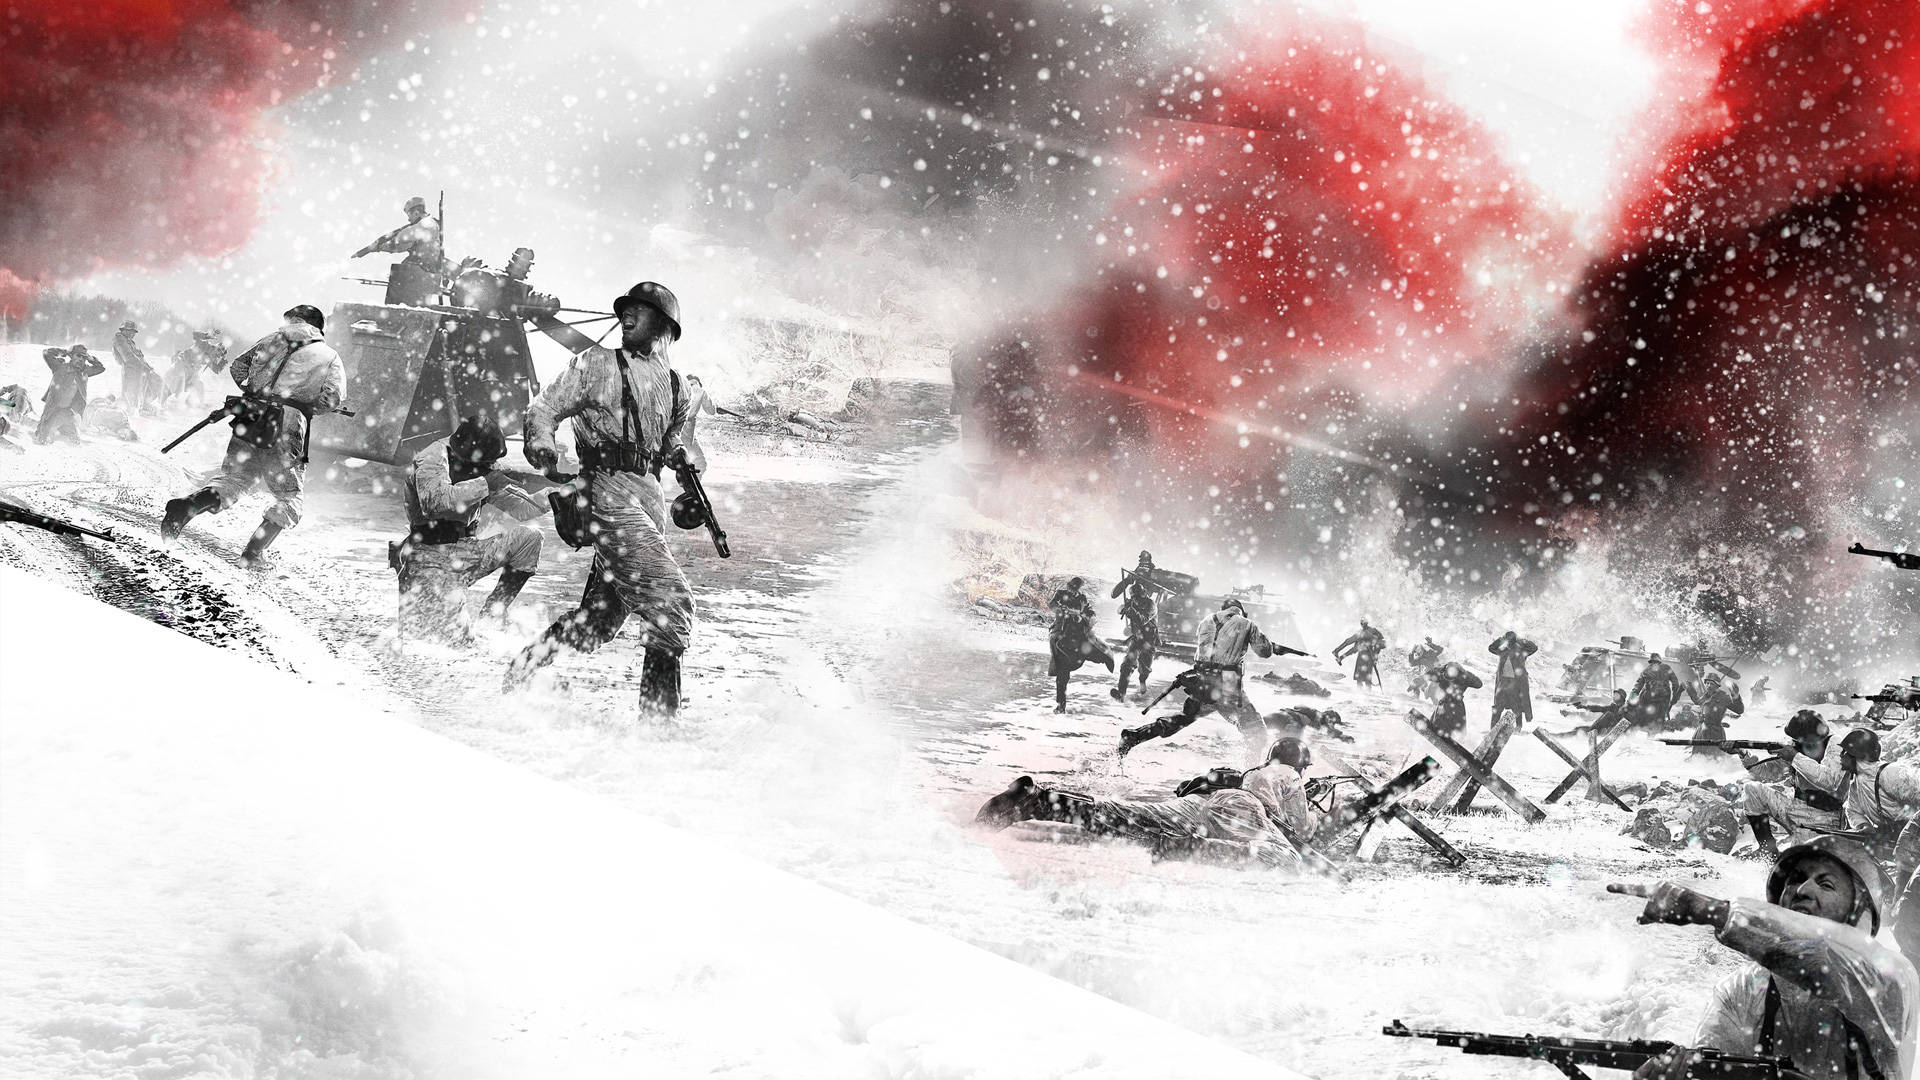 Intense Snow Battle in Company of Heroes 2 Wallpaper